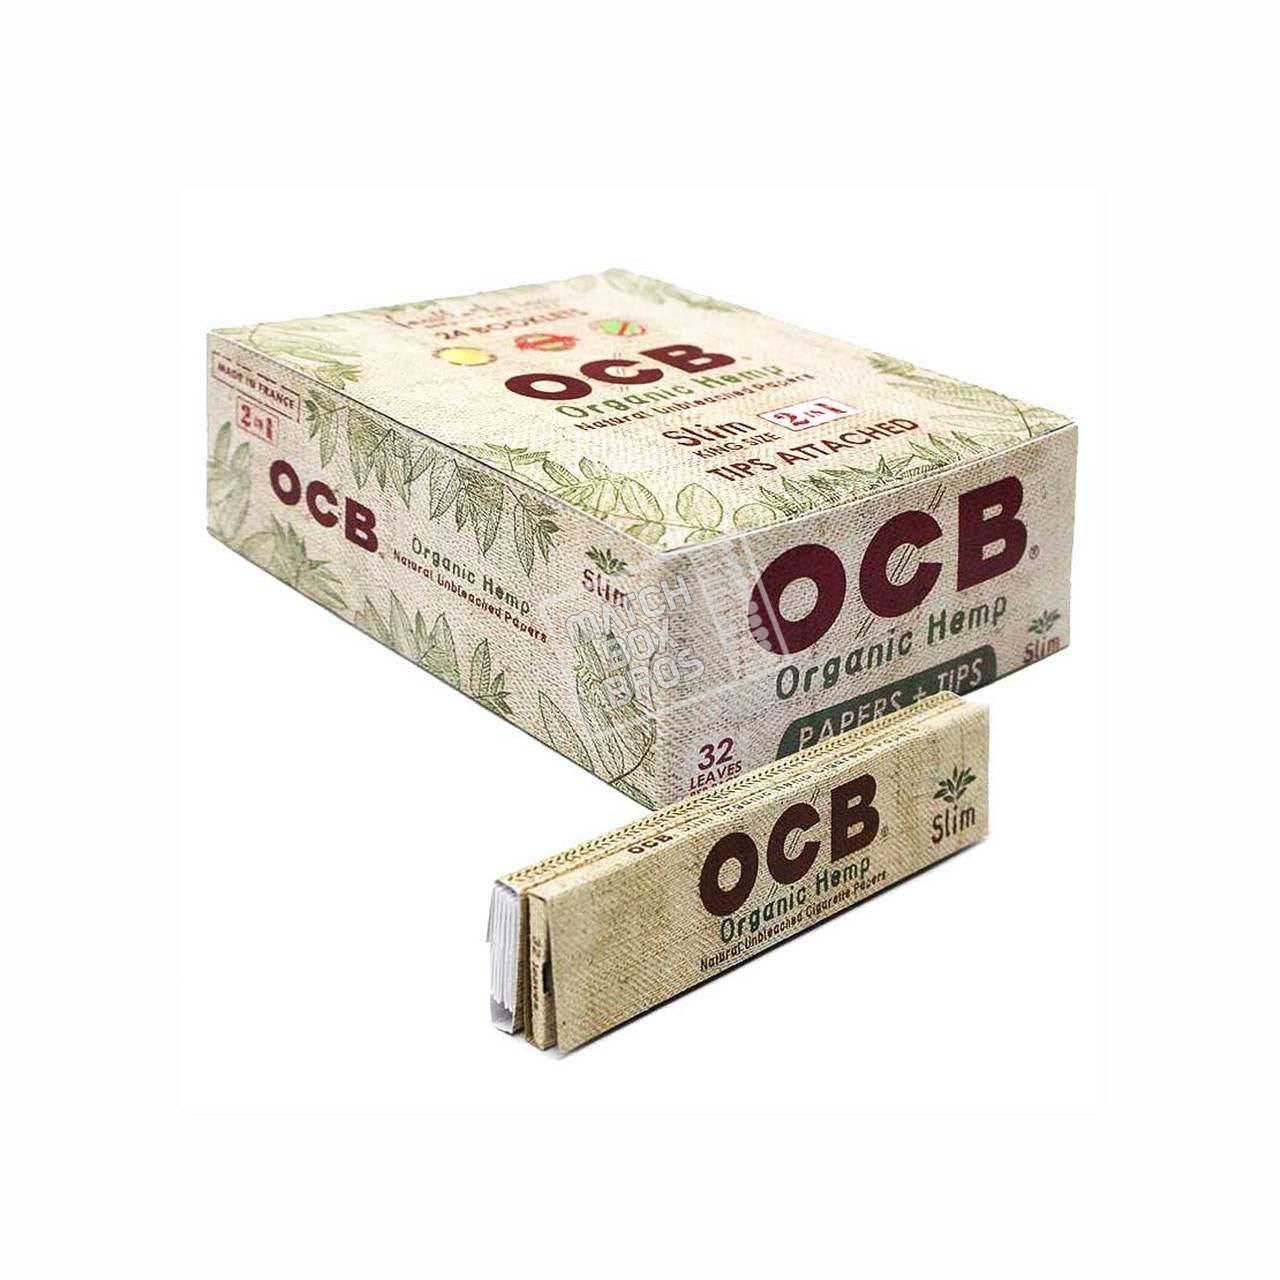 Ocb Regular Filter Tips Rolling Papers & Supplies